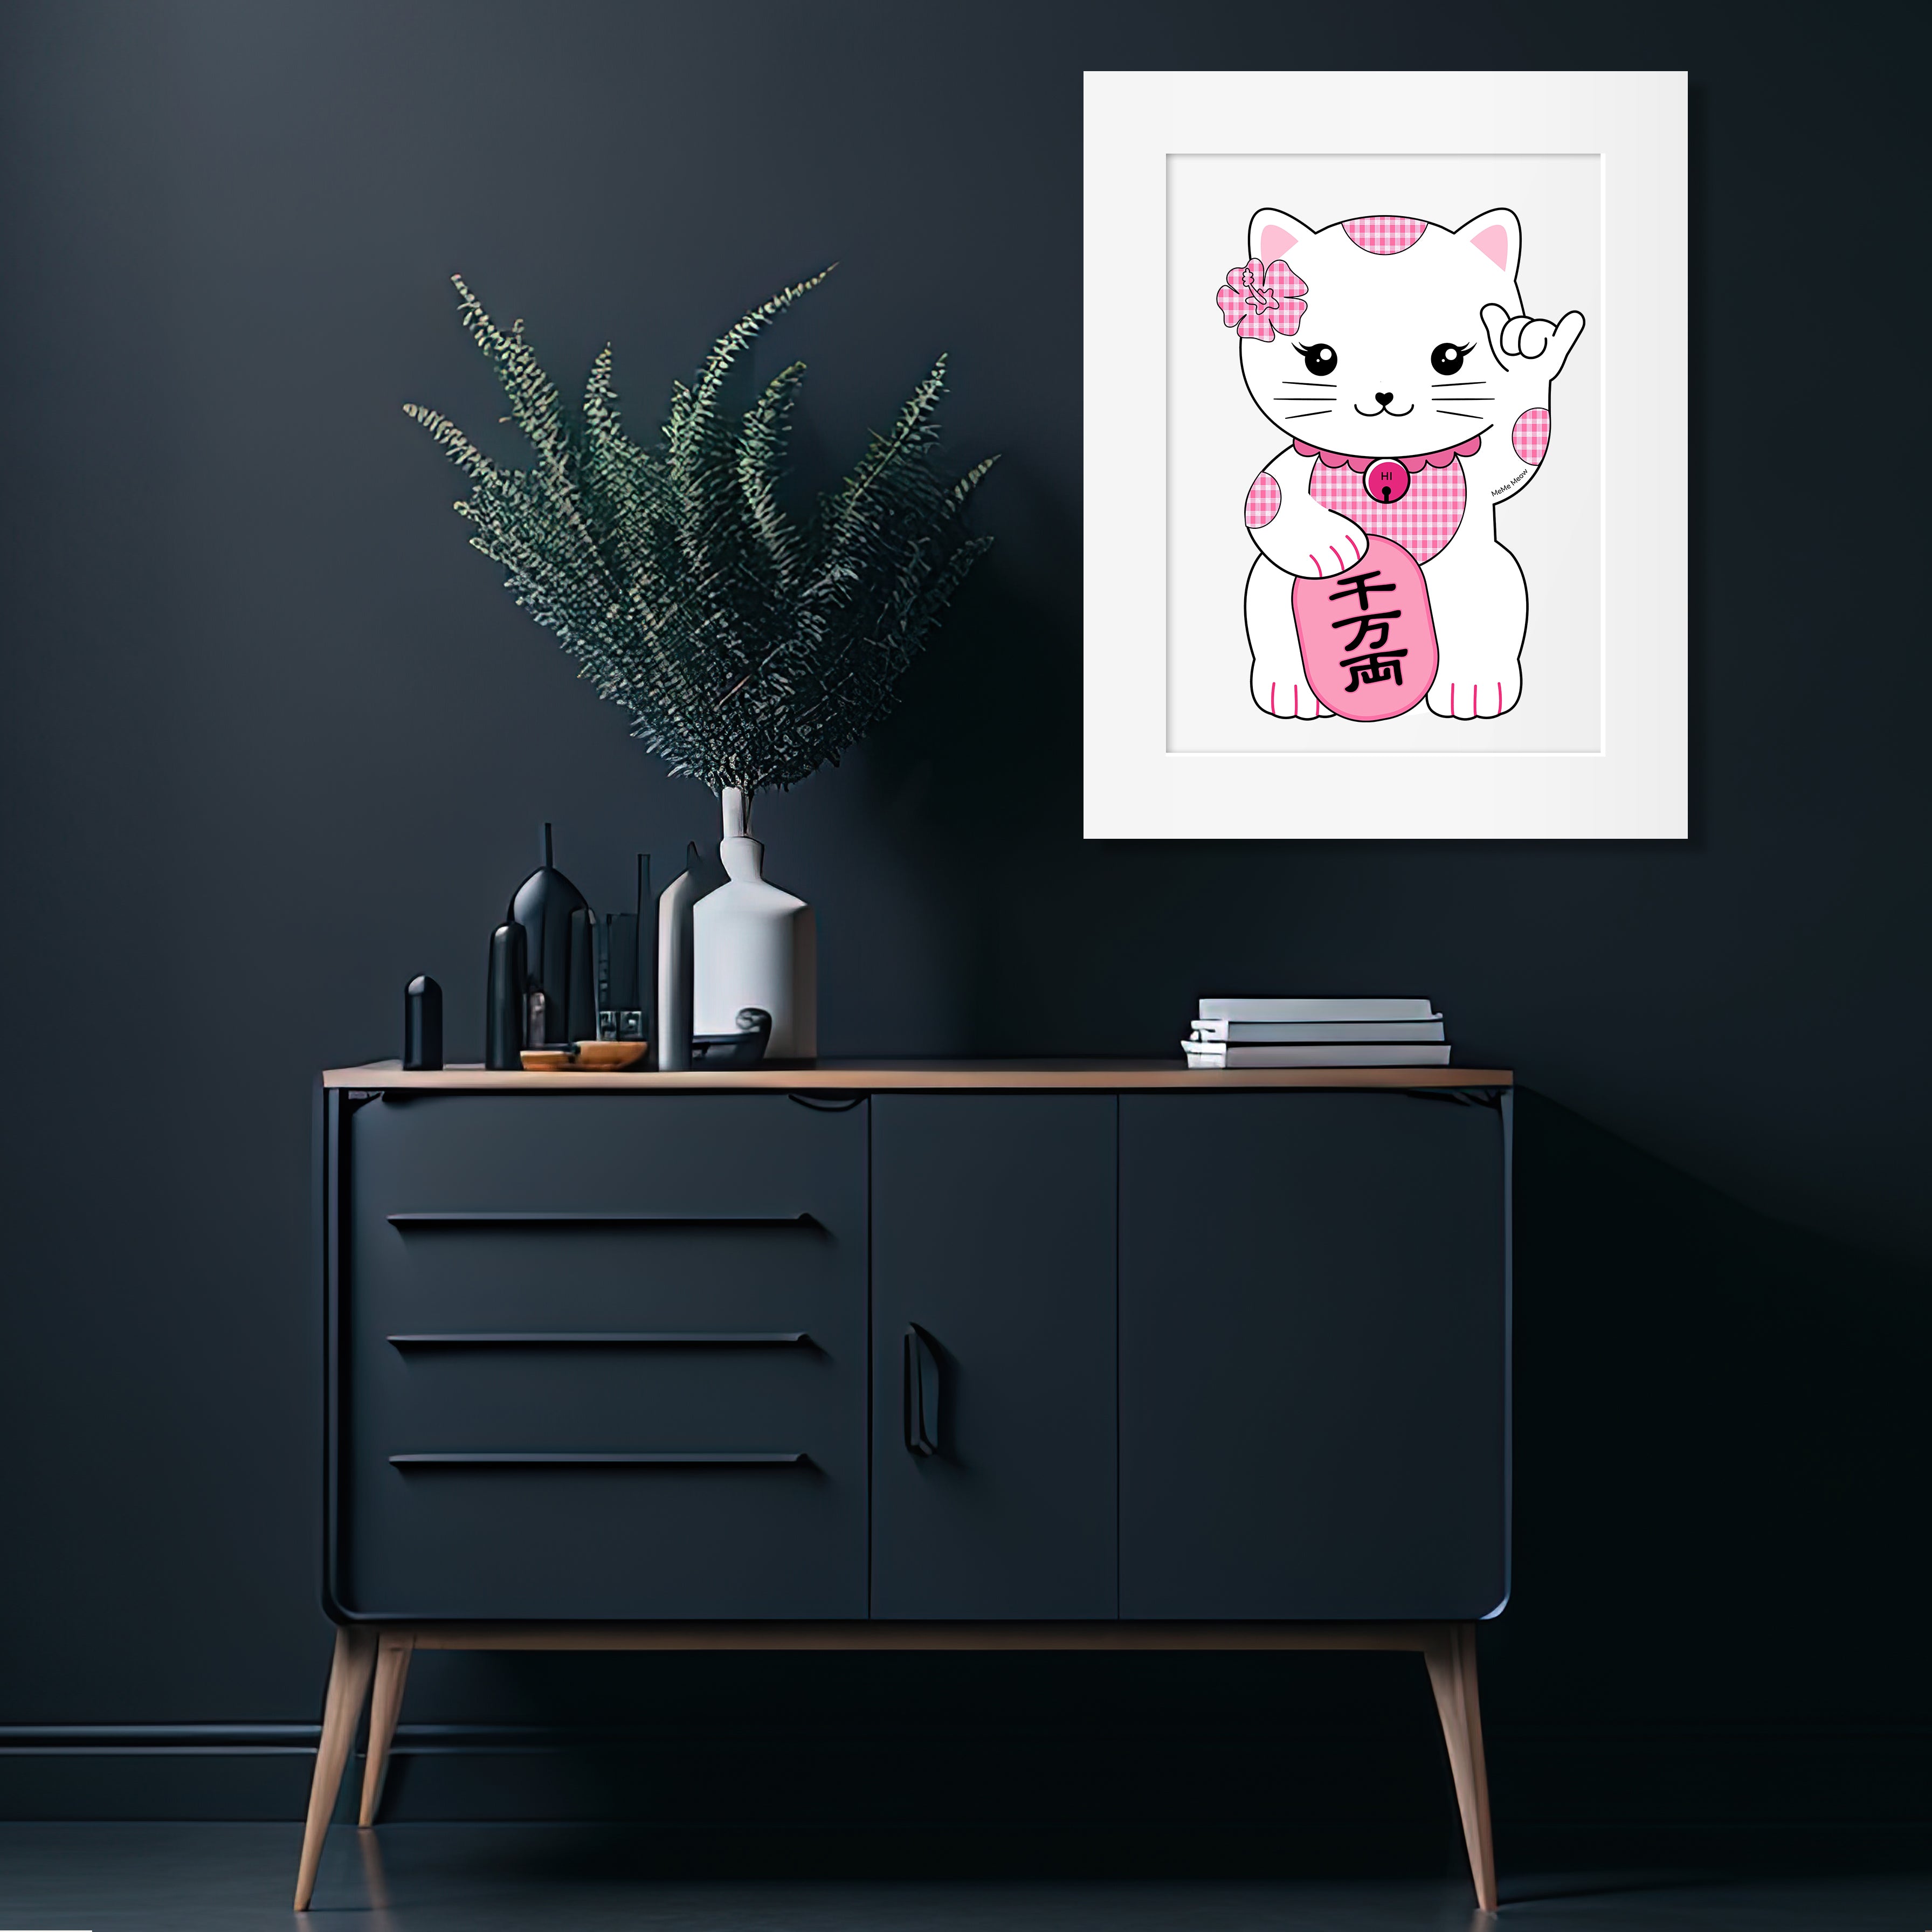 Luck and Charm Print Wall Art | MeMe Meow Maneki Neko | Citadine